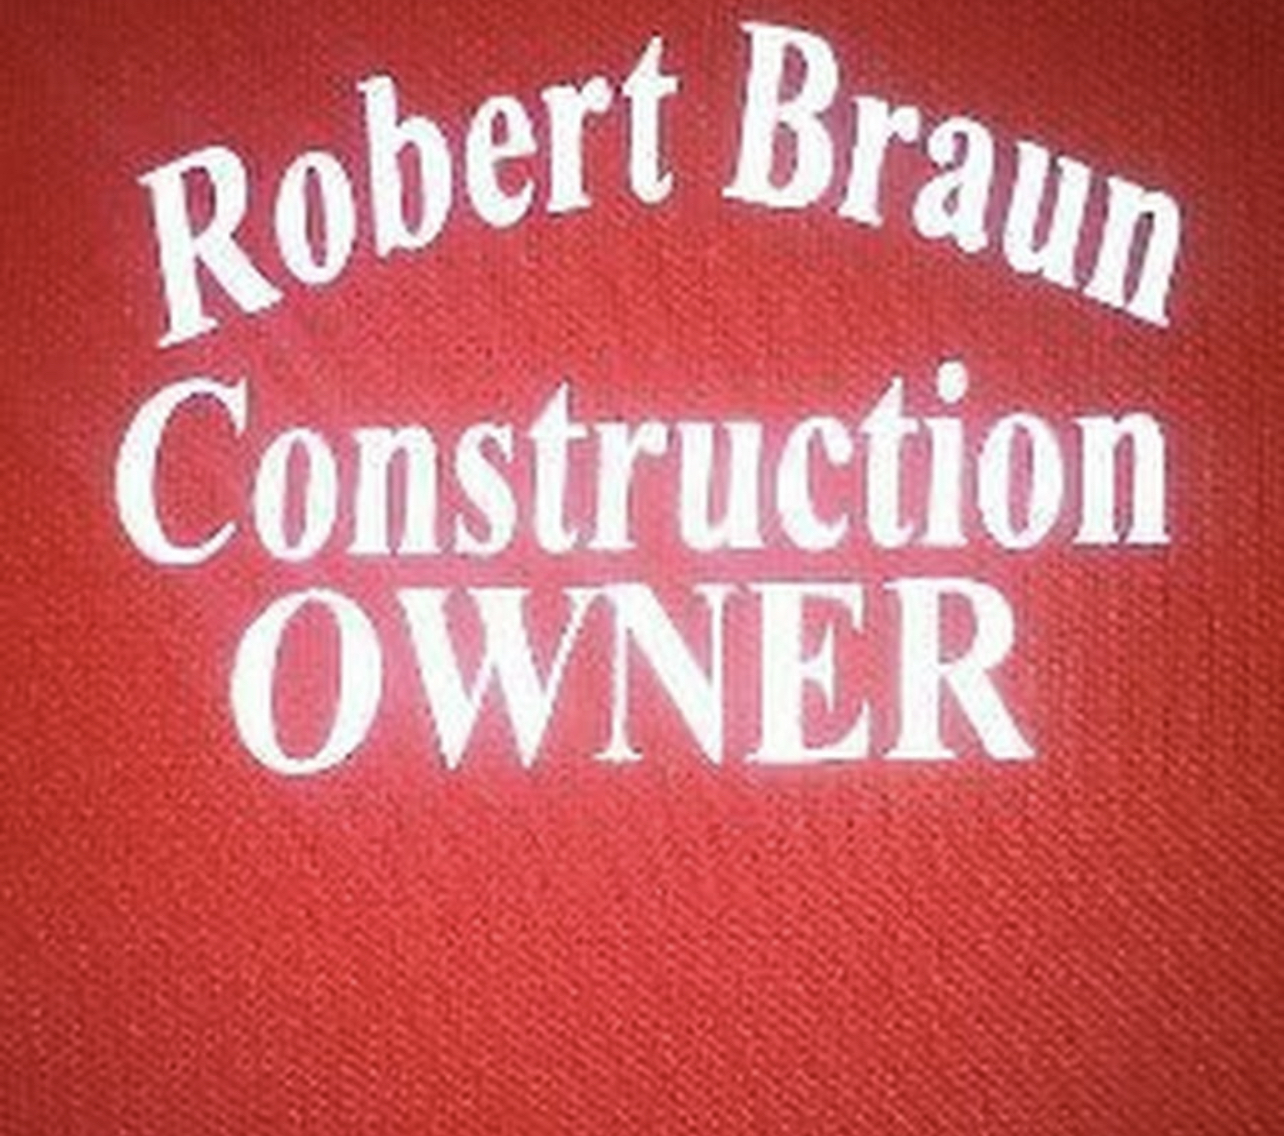 Robert Braun Construction Logo